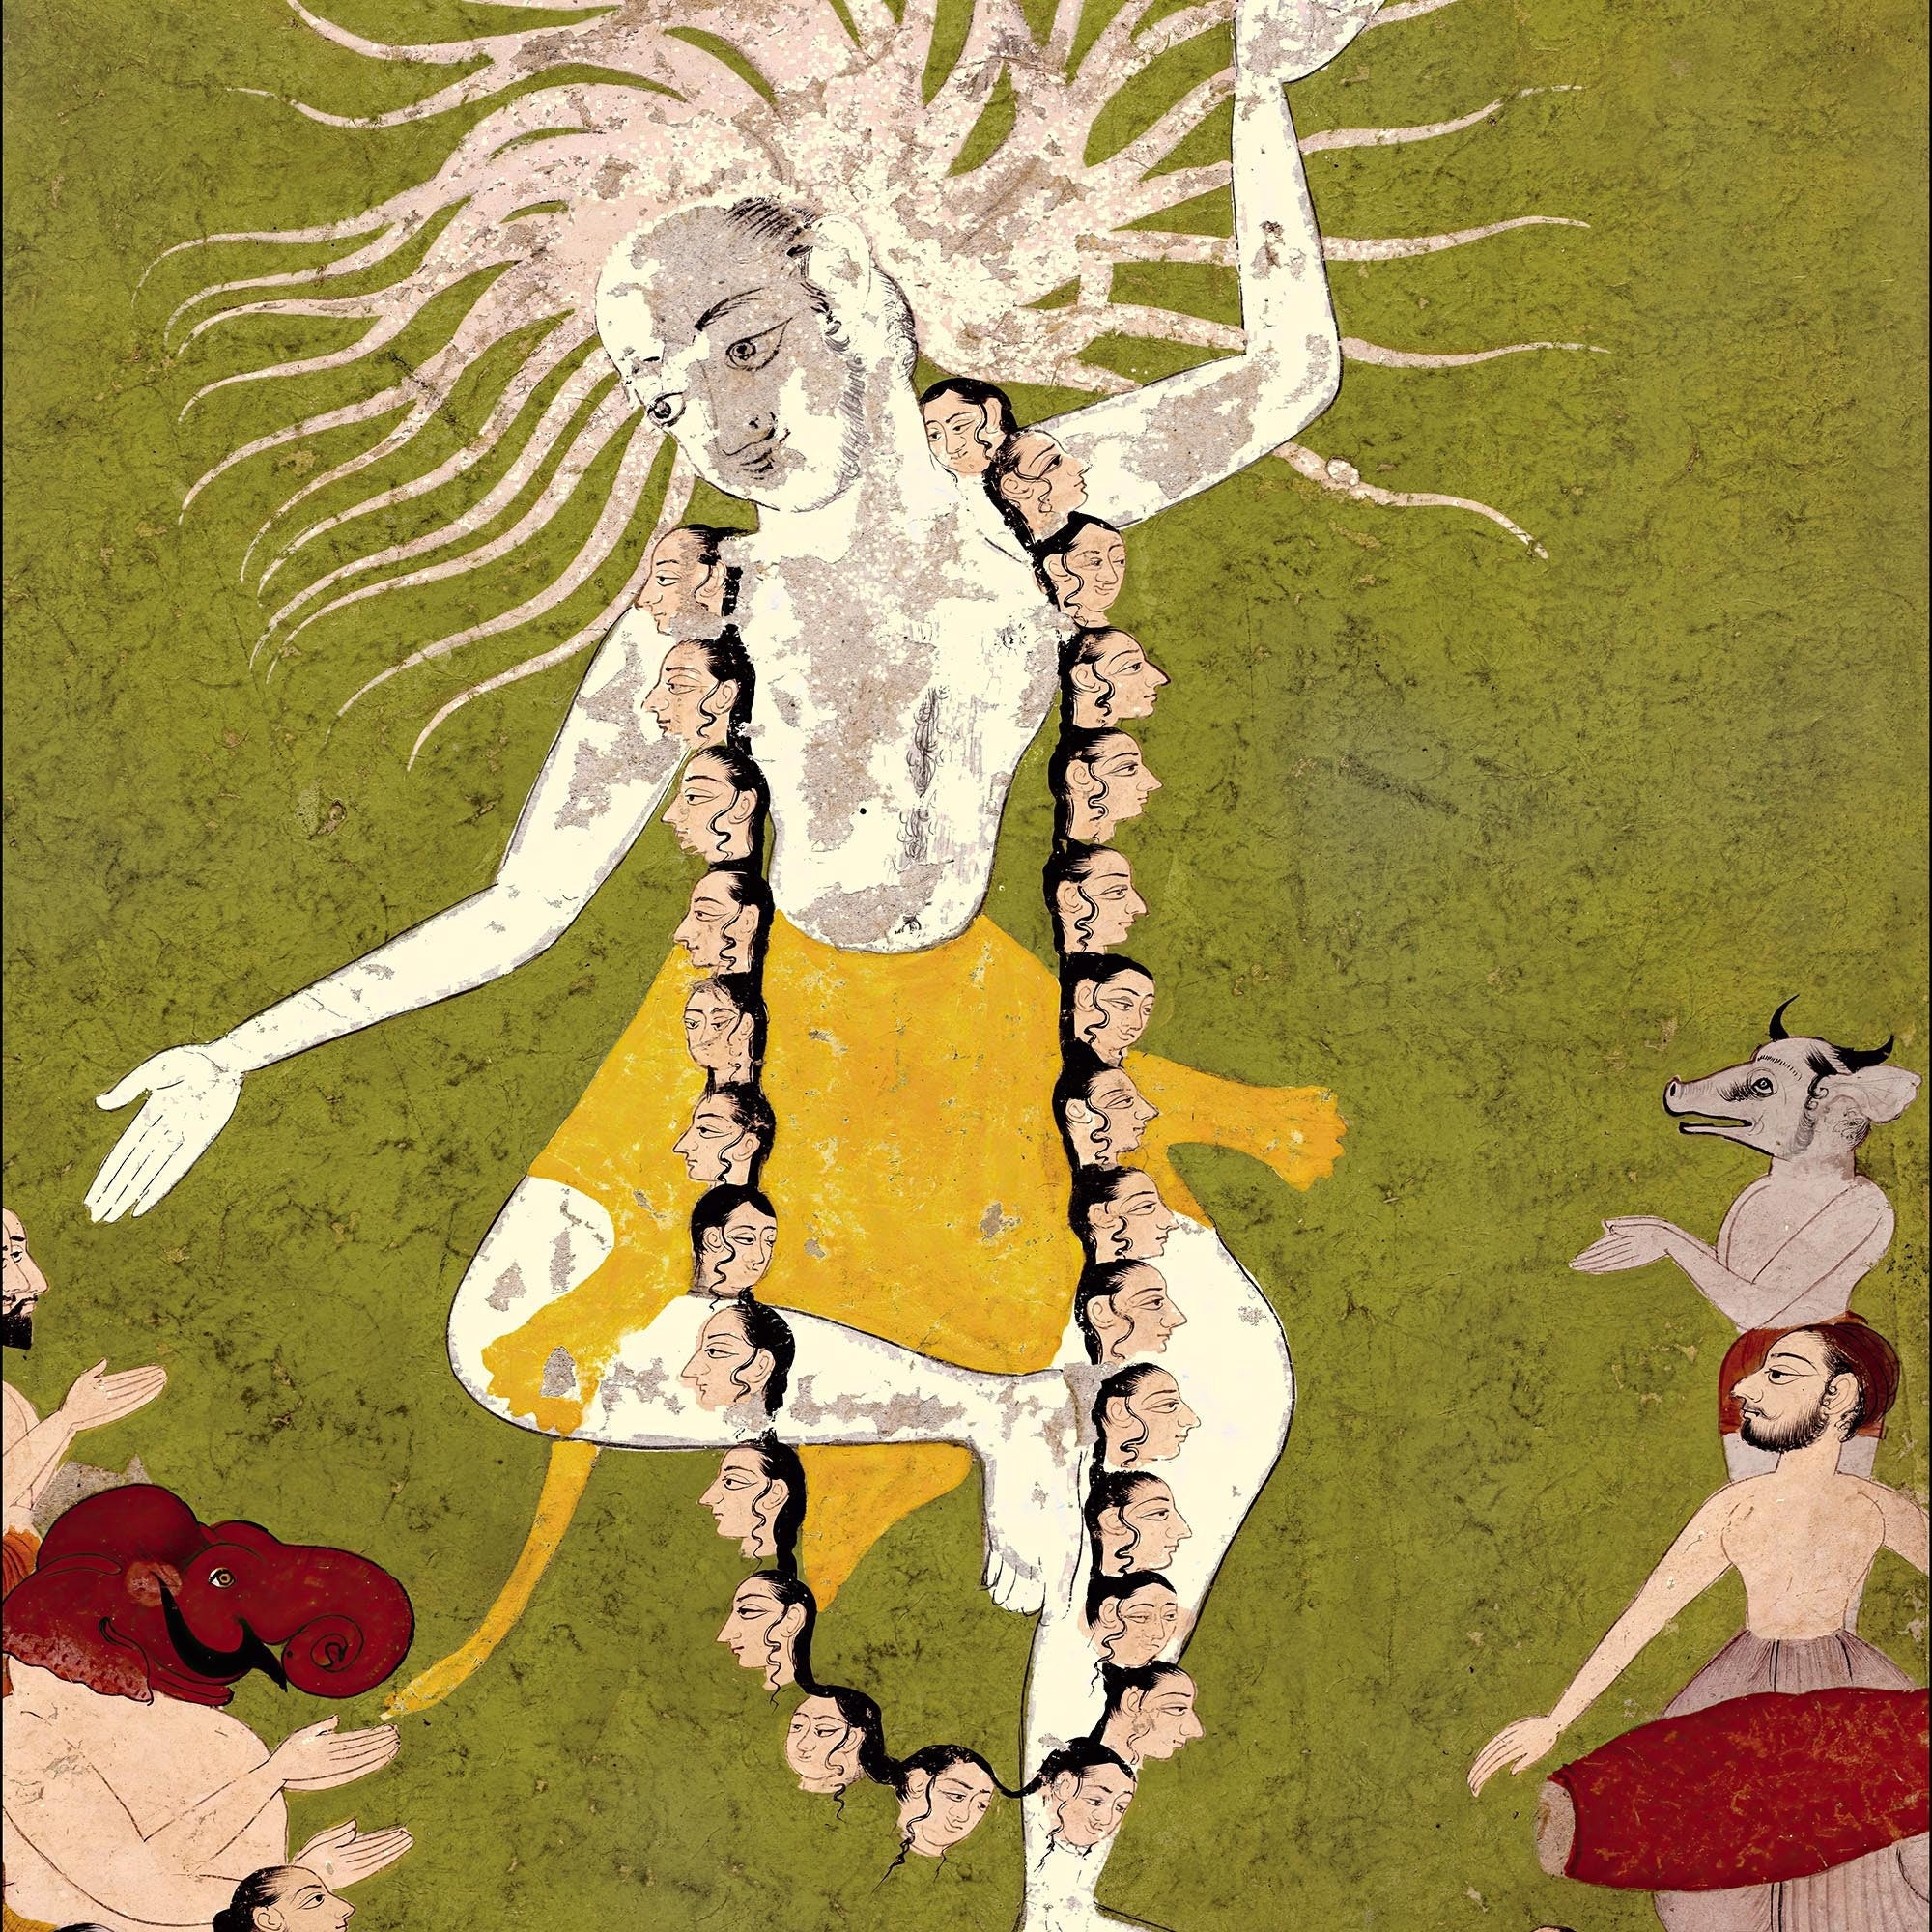 Lord Shiva in His Ferocious Aspect as Mahakala Dancing,  Yoga Decor, Indian Folk Art, Hindu Antique Fine Art Print with Thangka-Style Hanger